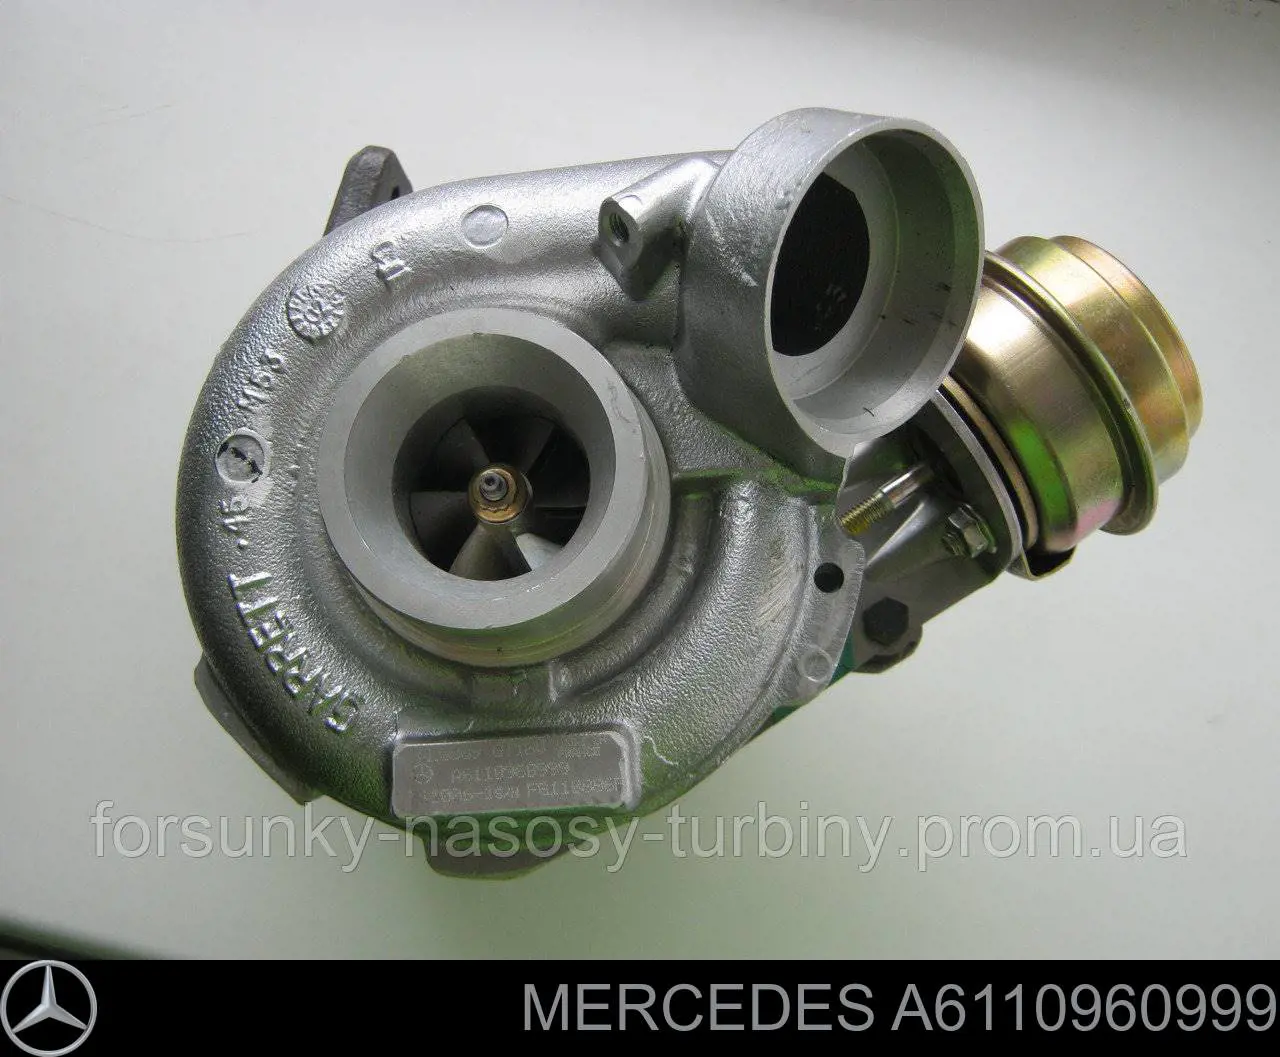 A6110960999 Mercedes turbina